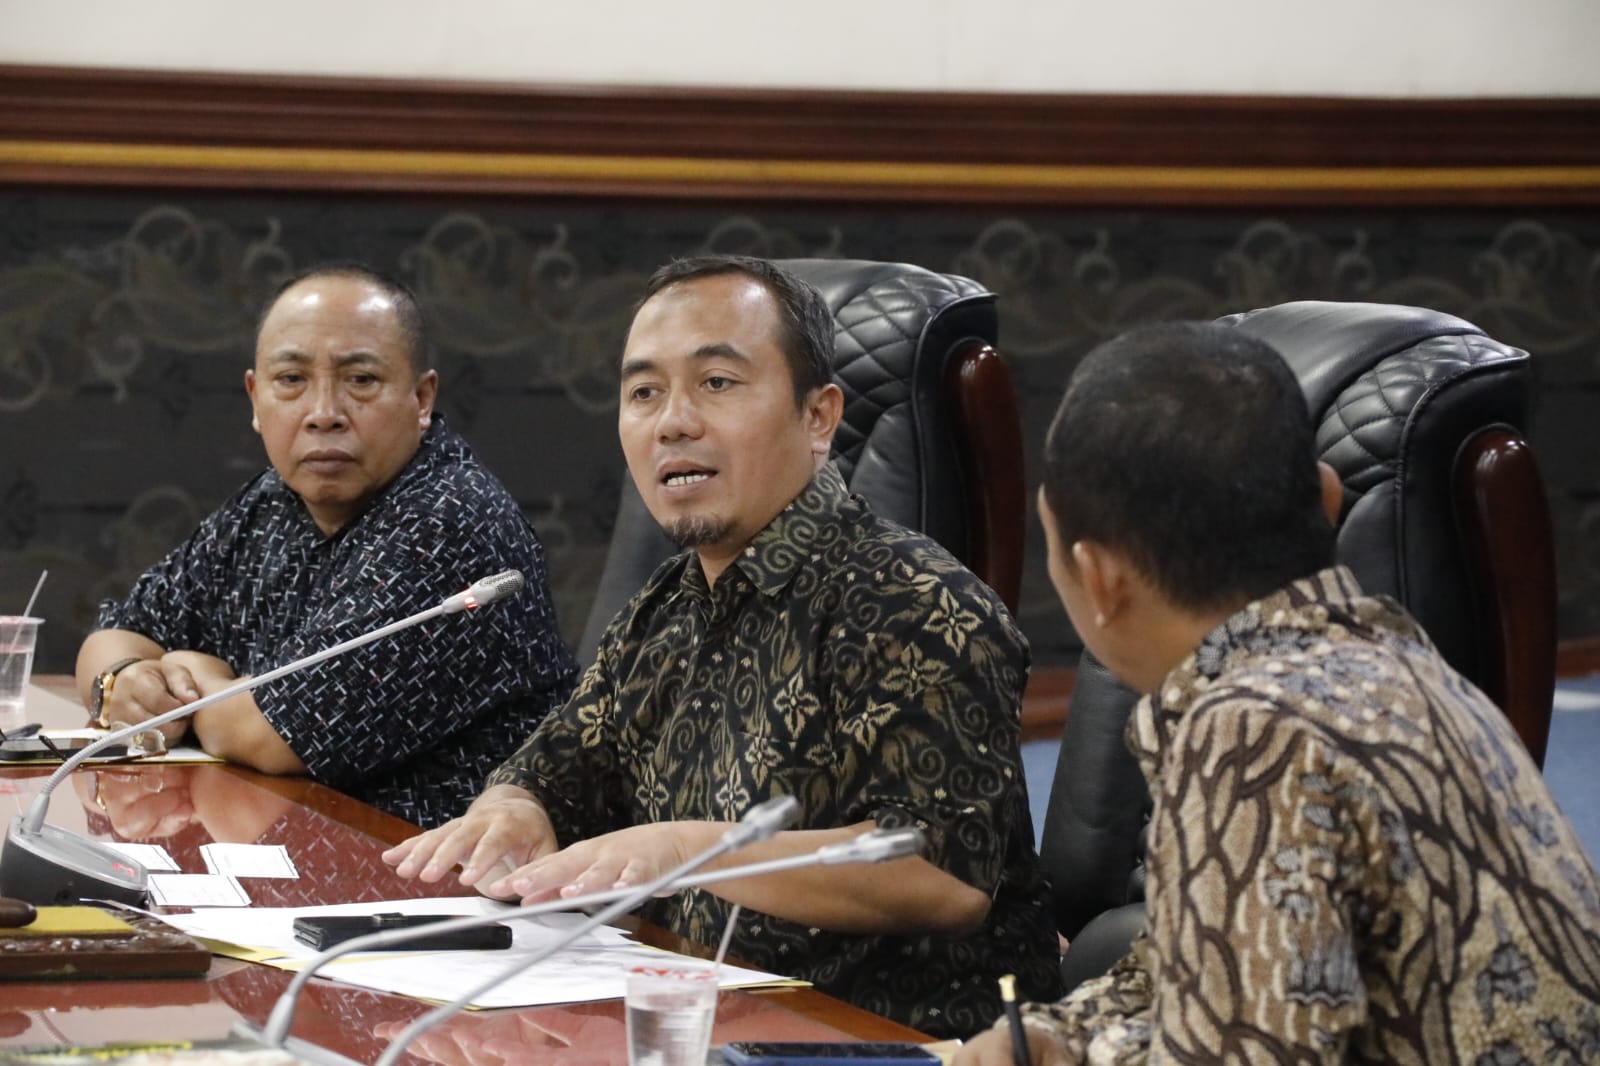 Anggota Komisi E yang sekaligus Anggota Badan Anggaran DPRD Provinsi Jawa Timur Basuki Babussalam mengapresiasi komitmen bersama antara DPRD Yogyakarta dengan DPRD Provinsi Jawa Timur